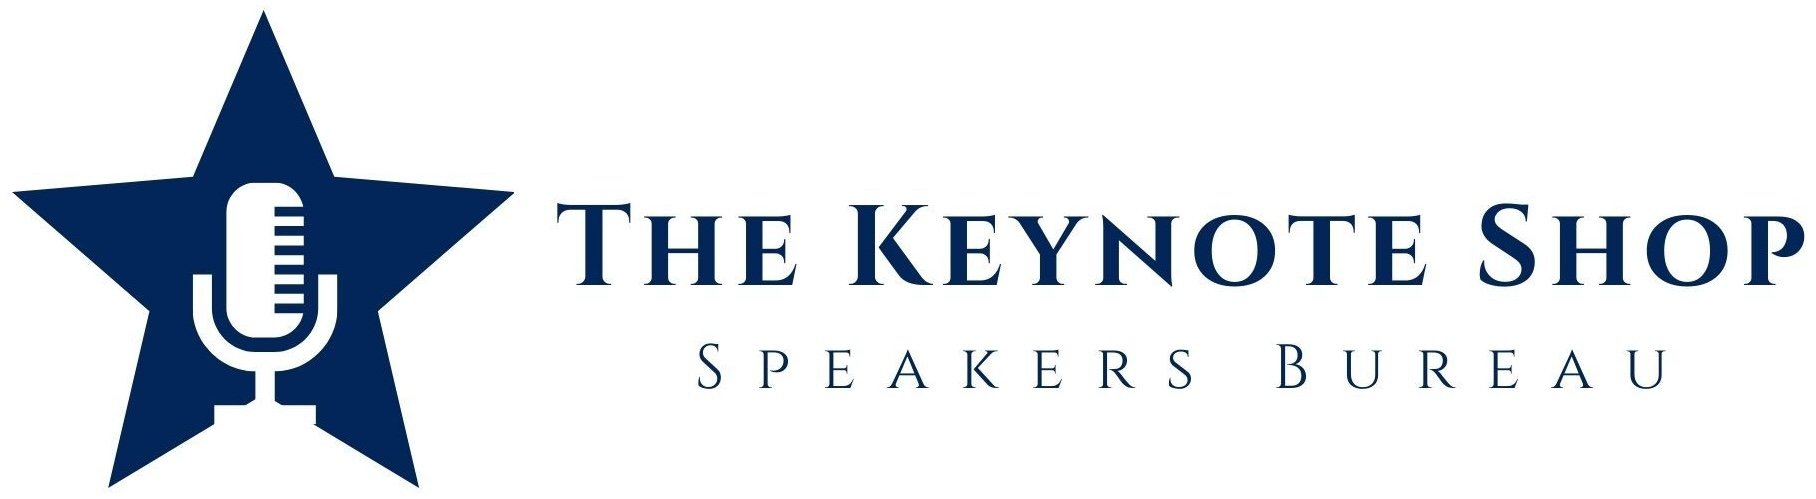 The Keynote Shop Logo - Horizontal - White Background.jpg